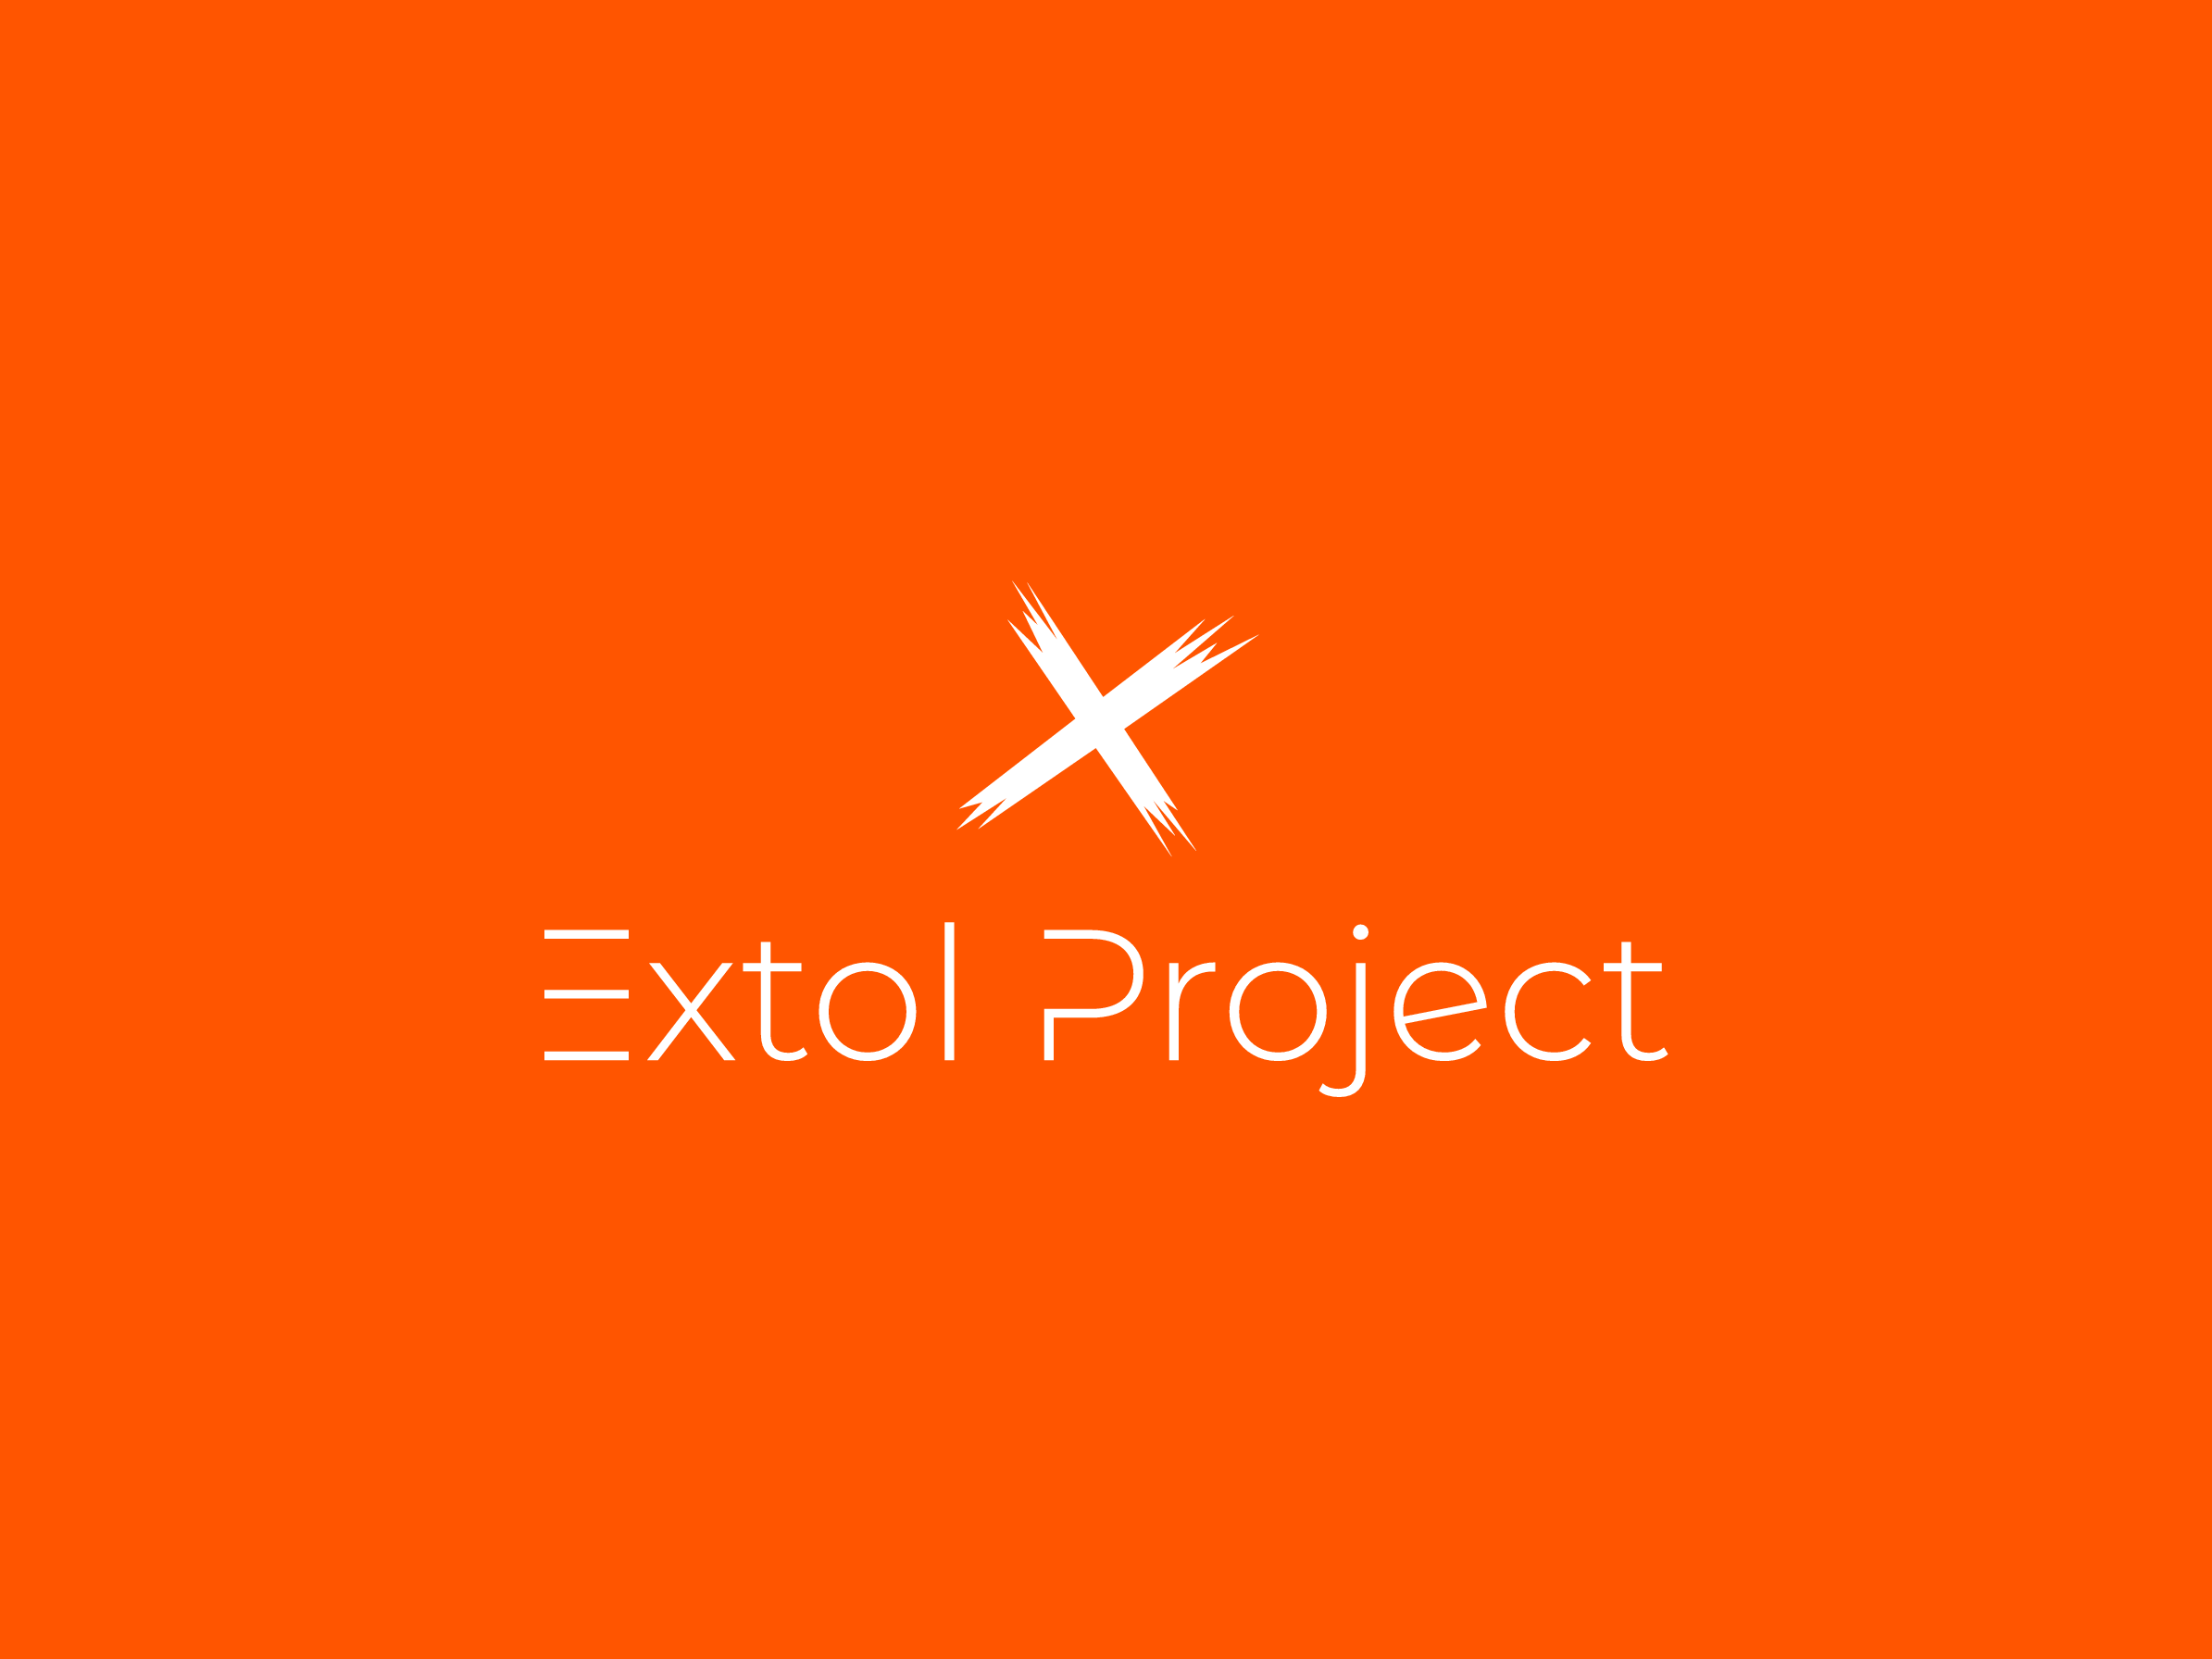 Extol Project logo